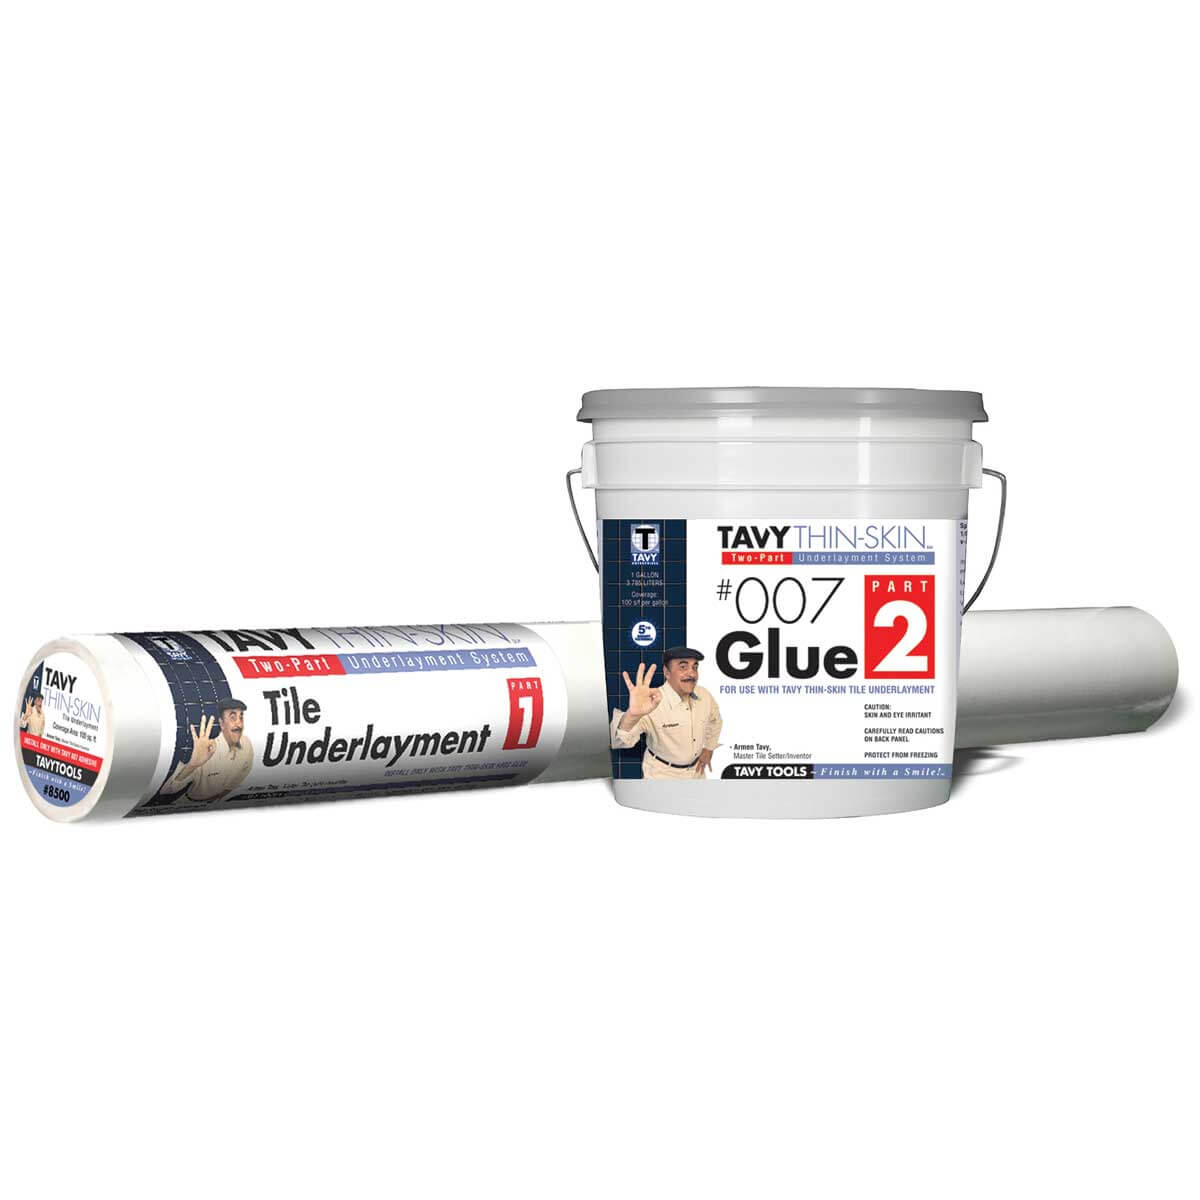 Tavy Thin-Skin #007 Glue